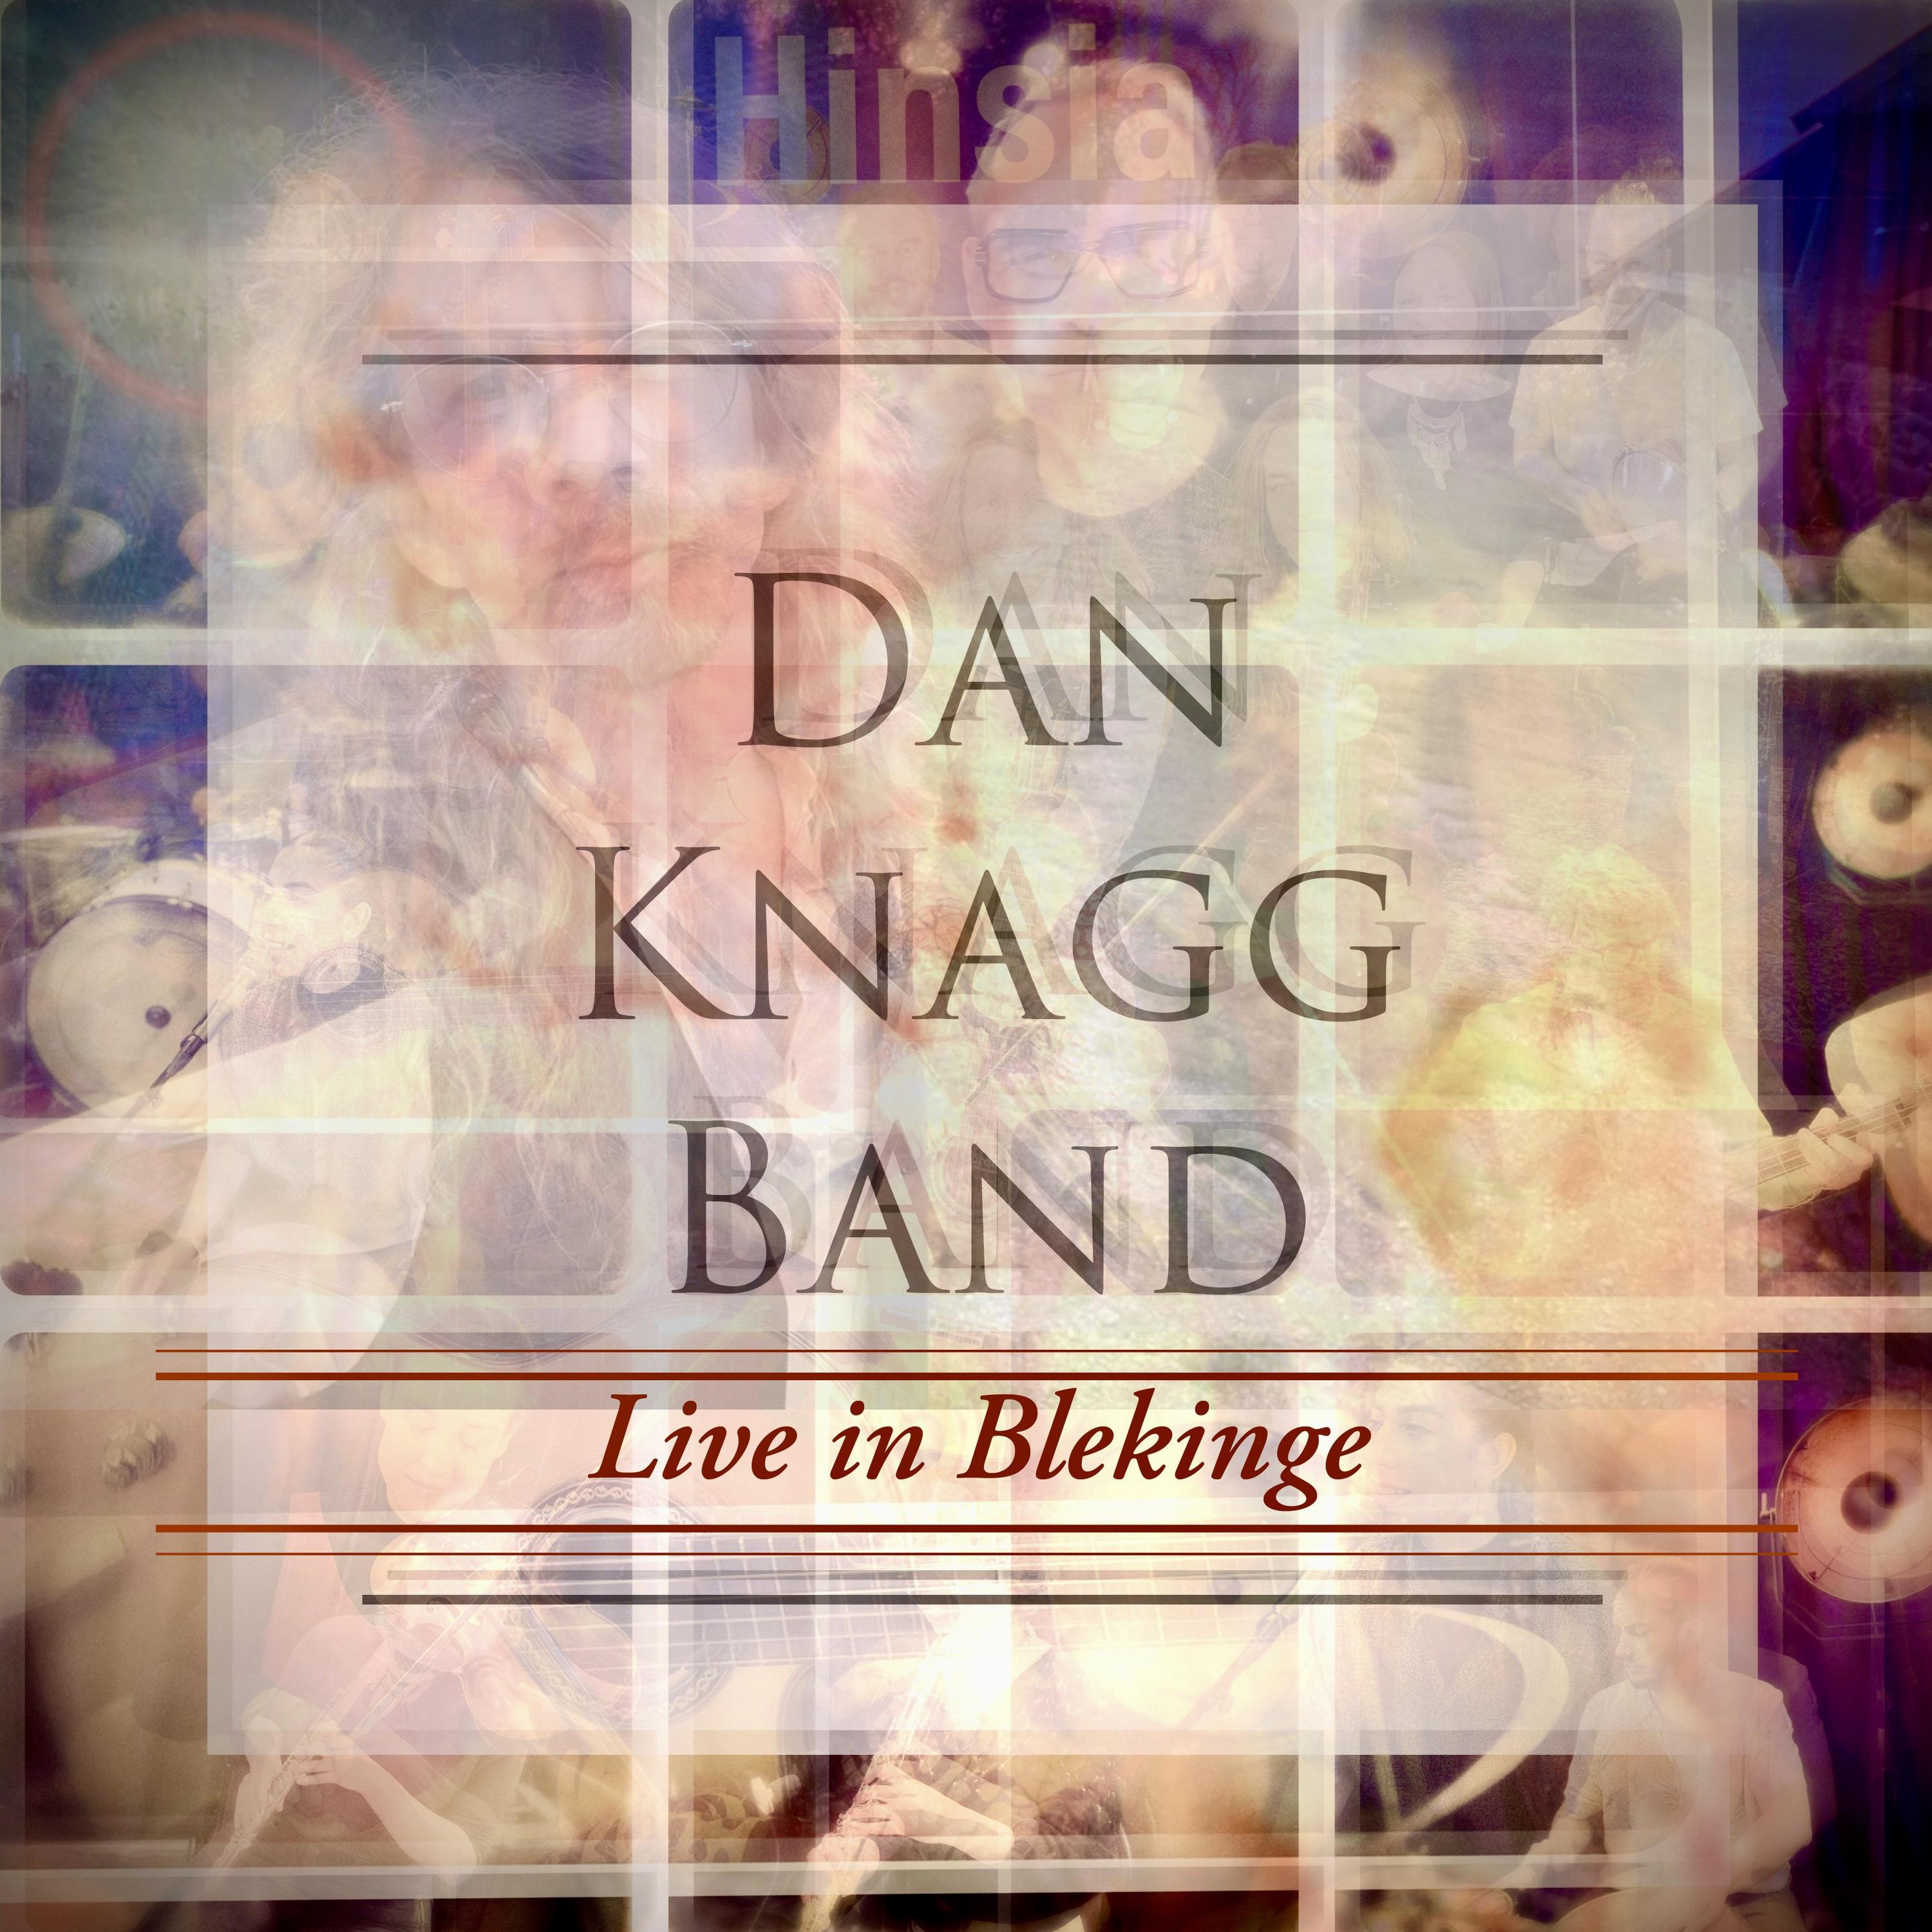 Dan Knagg Band - Ur min hand (Live)